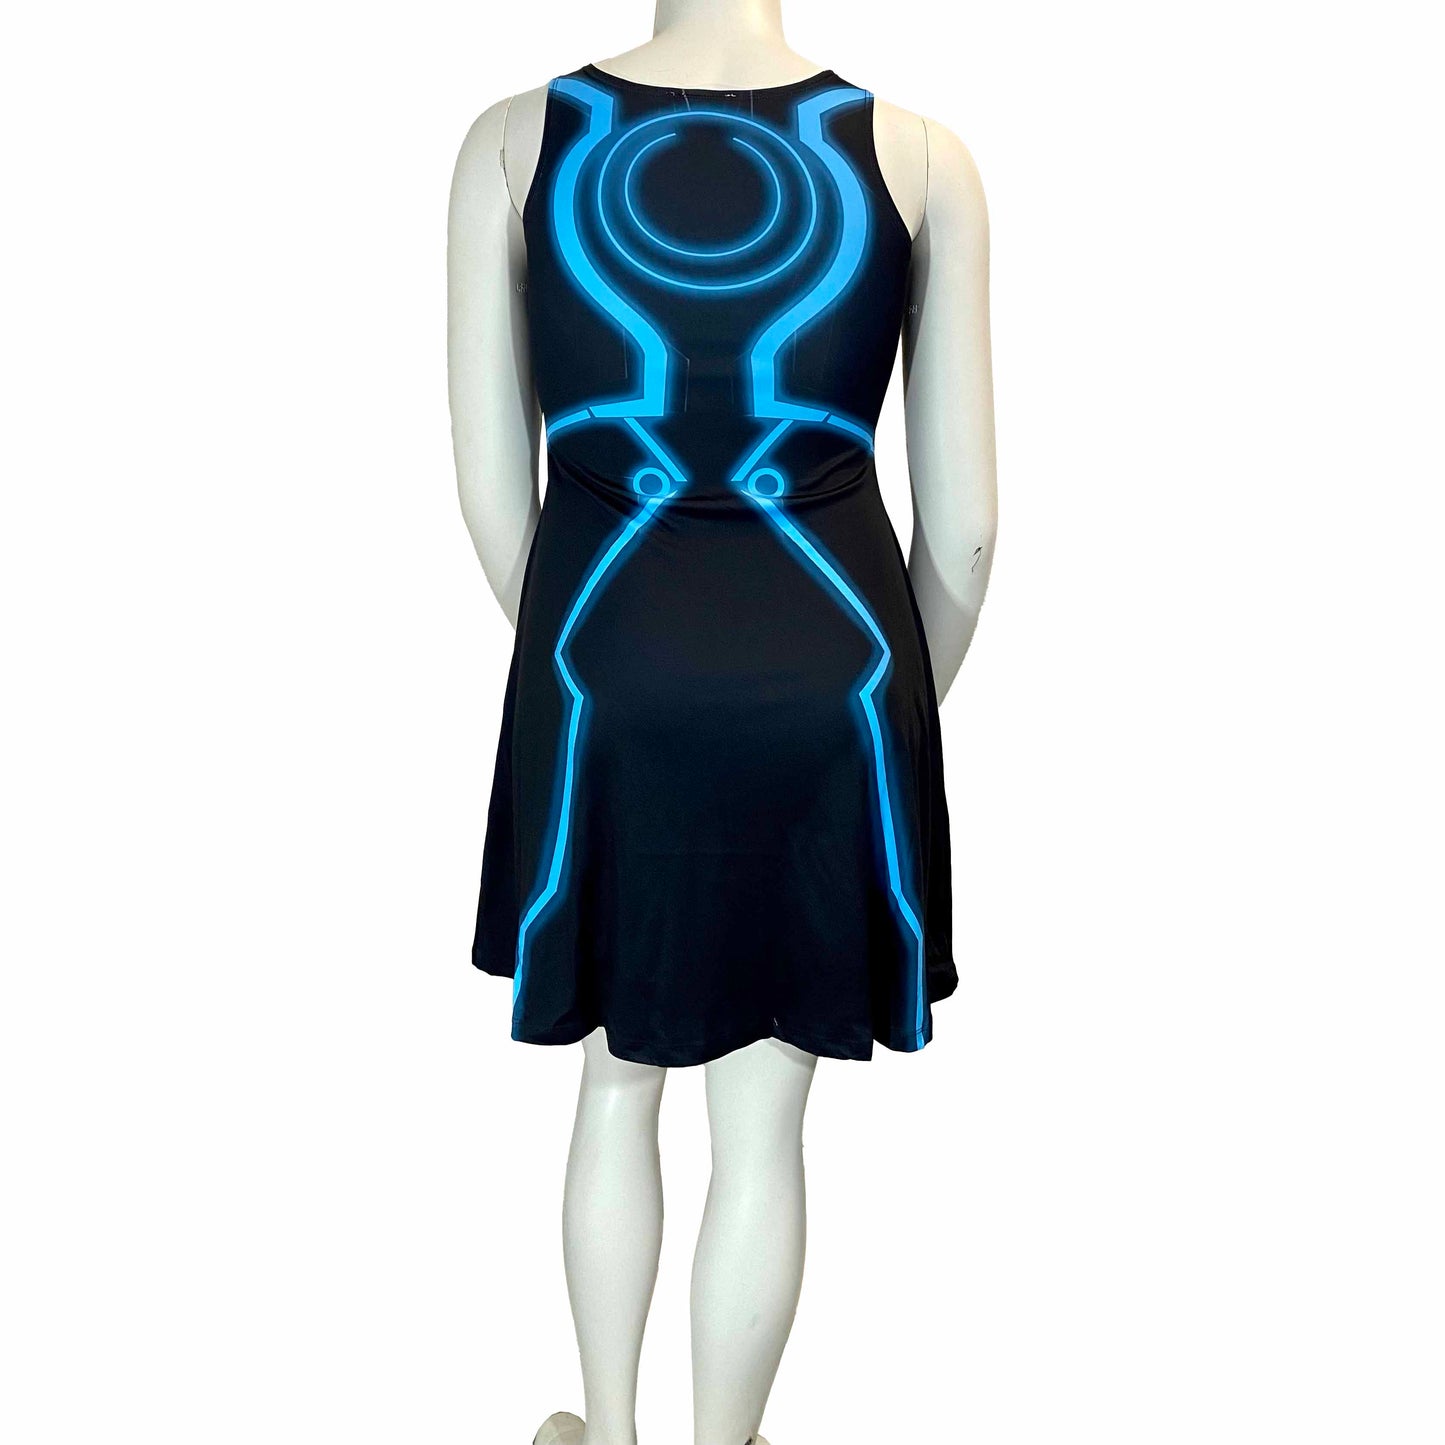 Tron Legacy Inspired Sleeveless Dress